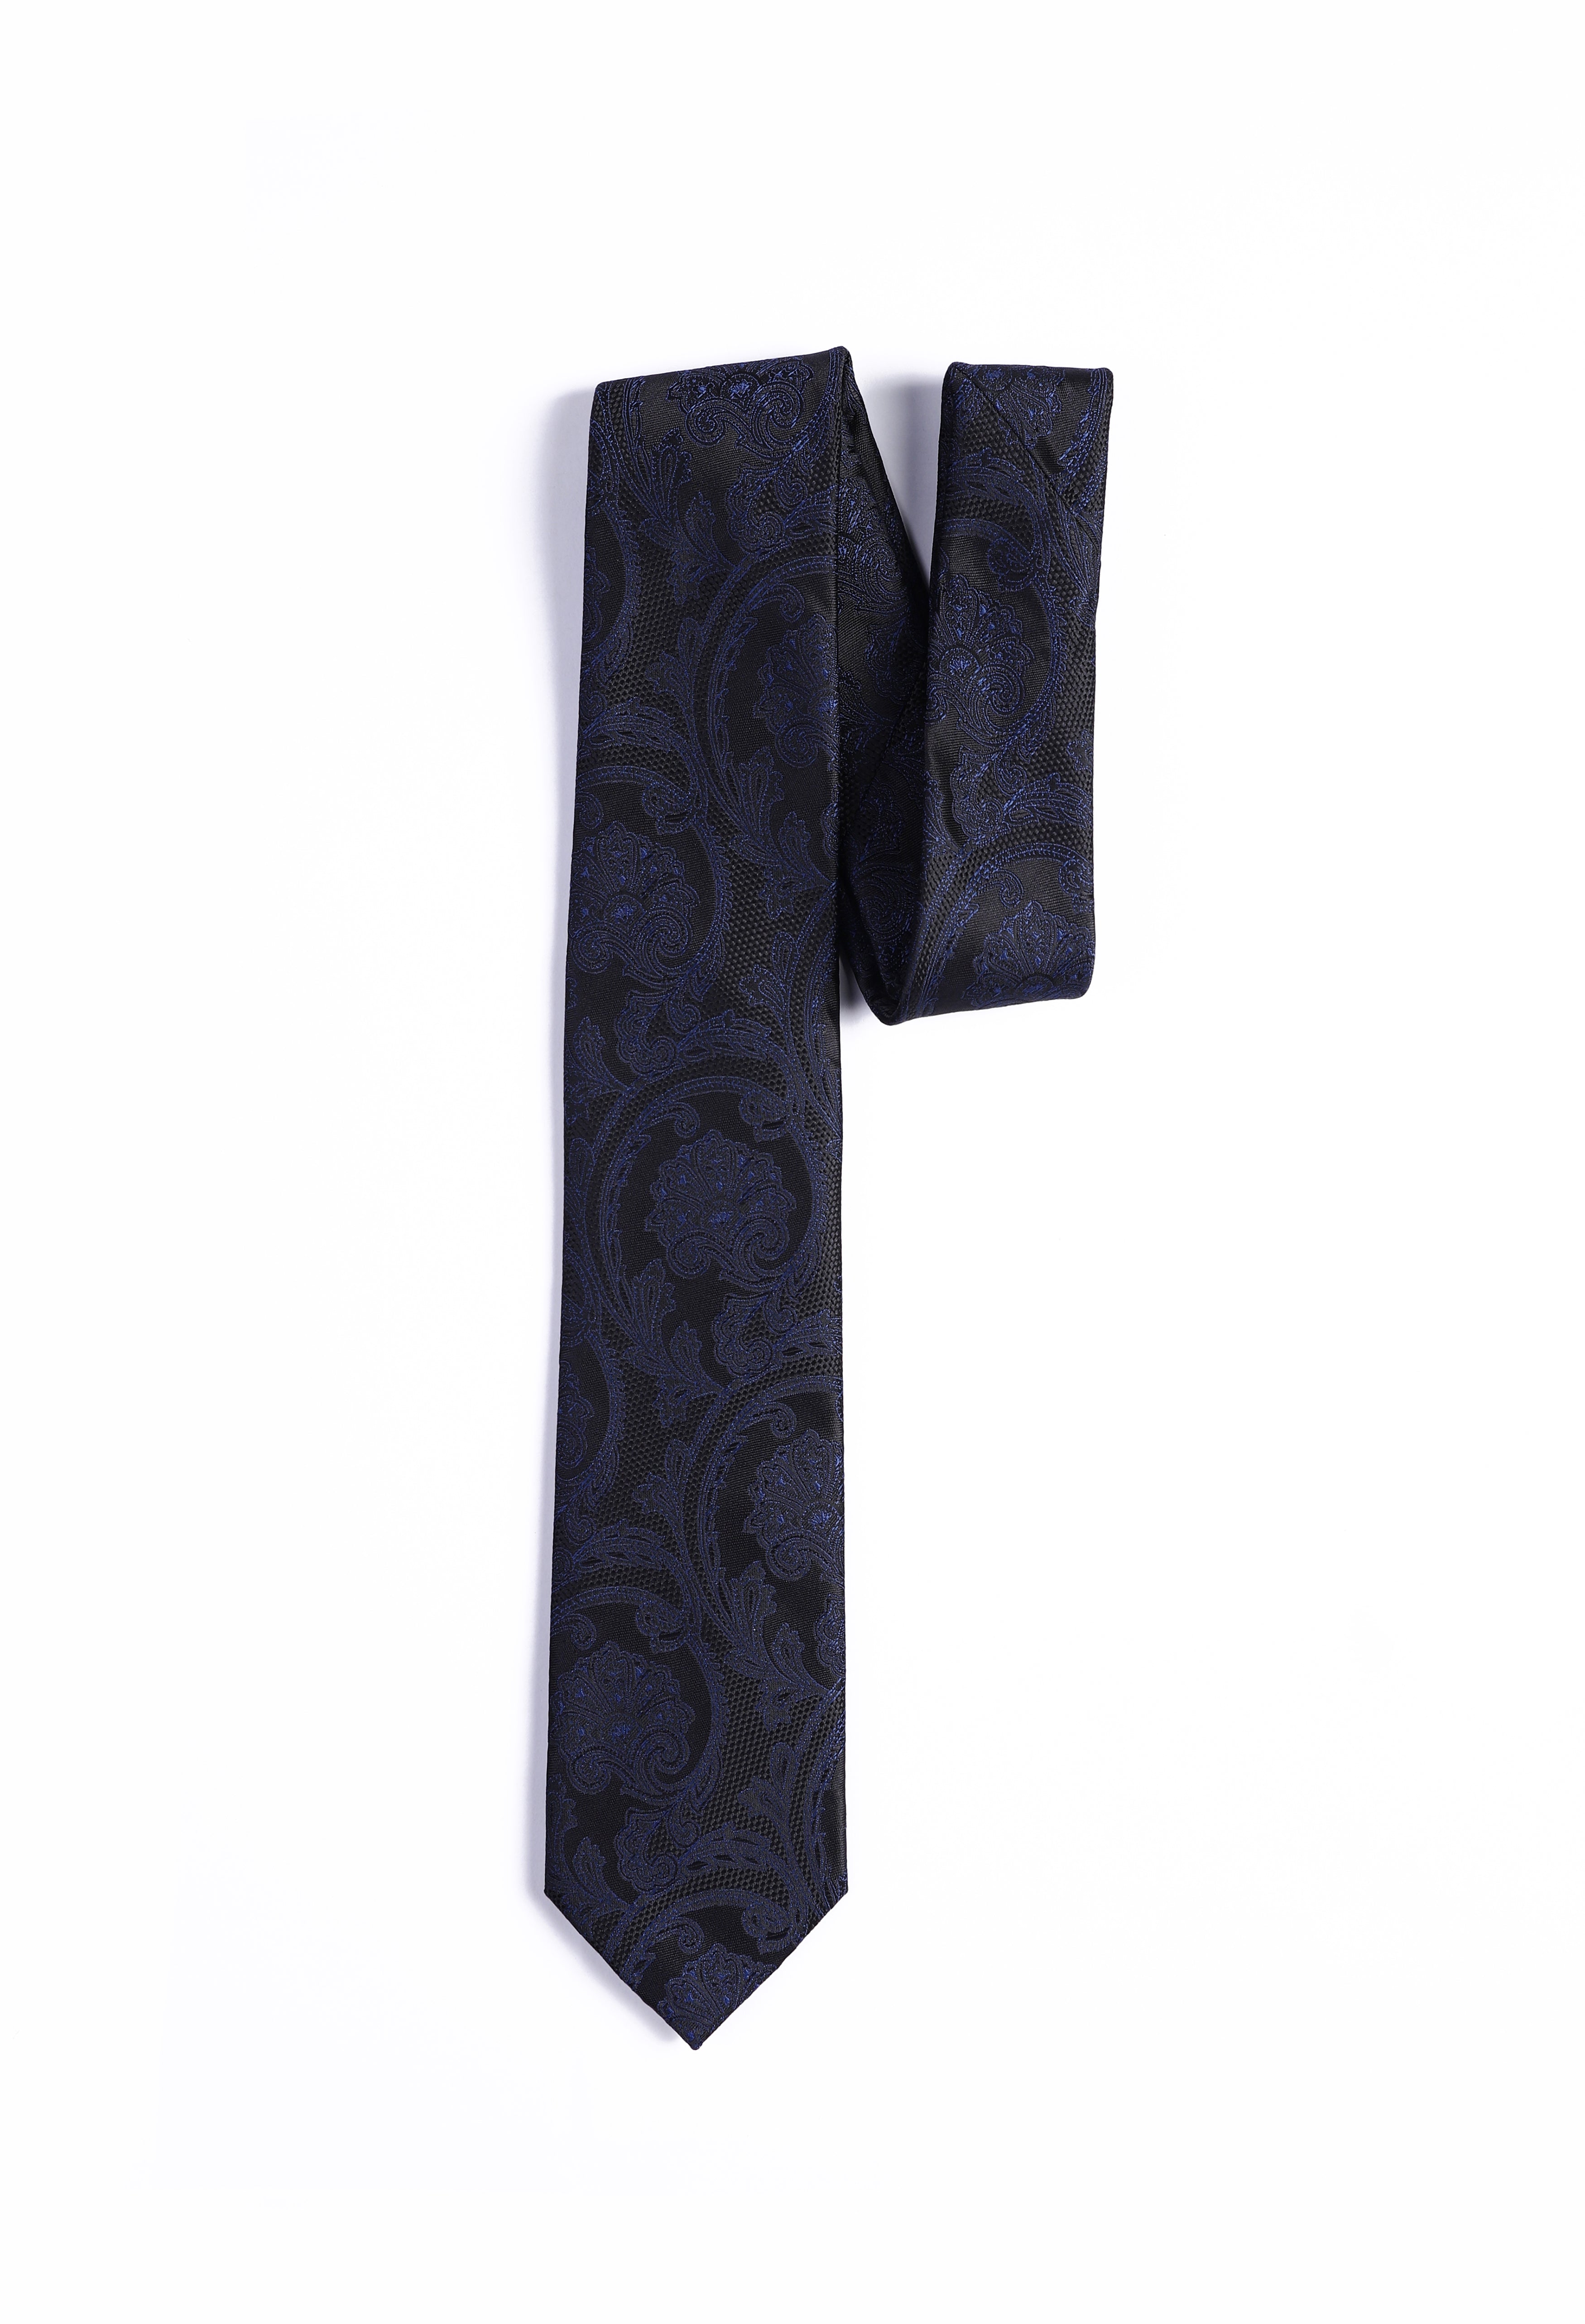 Oxford Blue Paisley Tie (TIE-000023)